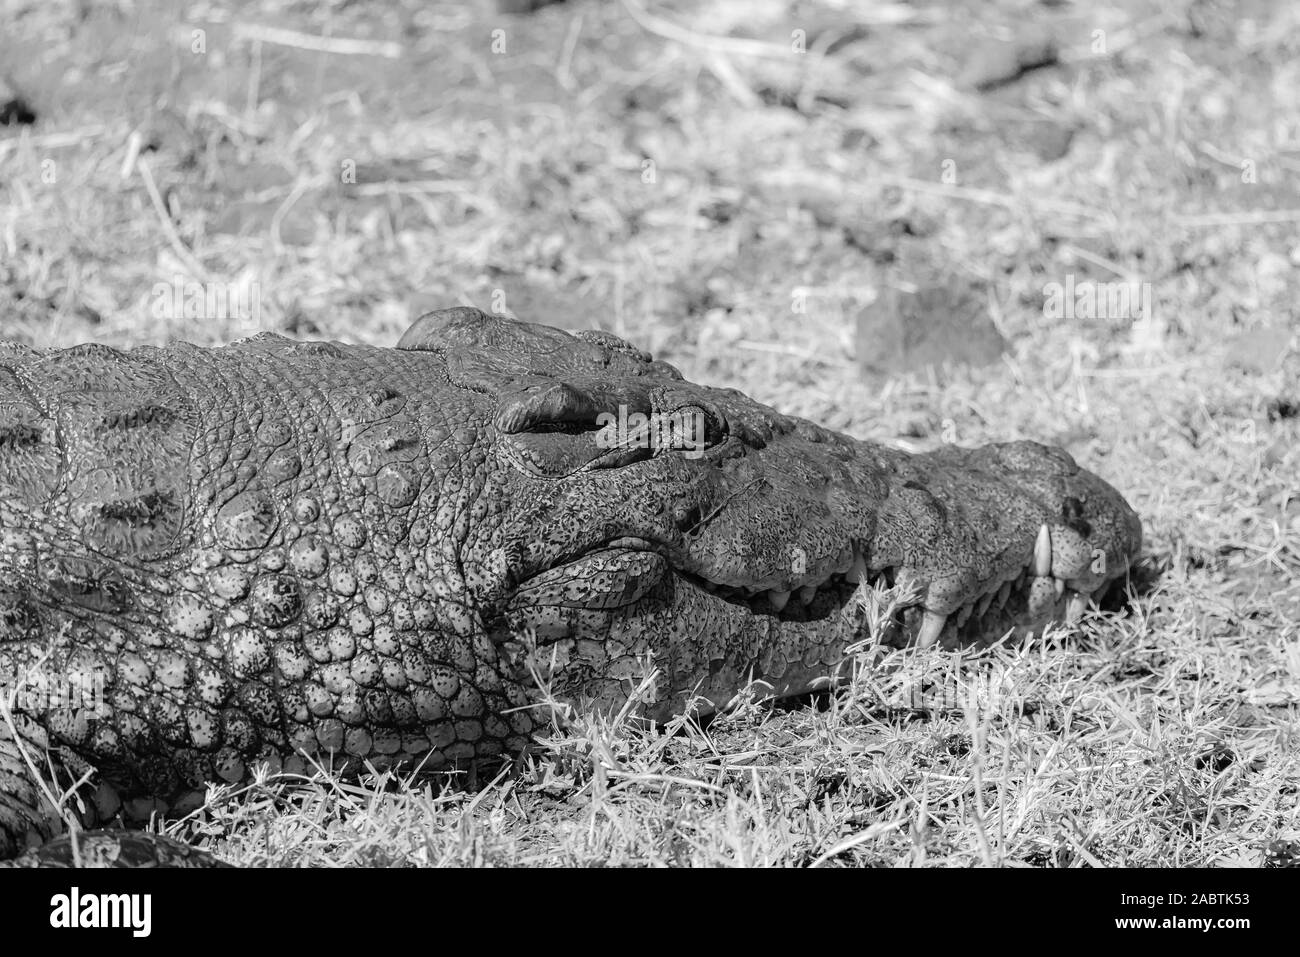 close up picture of a nile crocodile Stock Photo